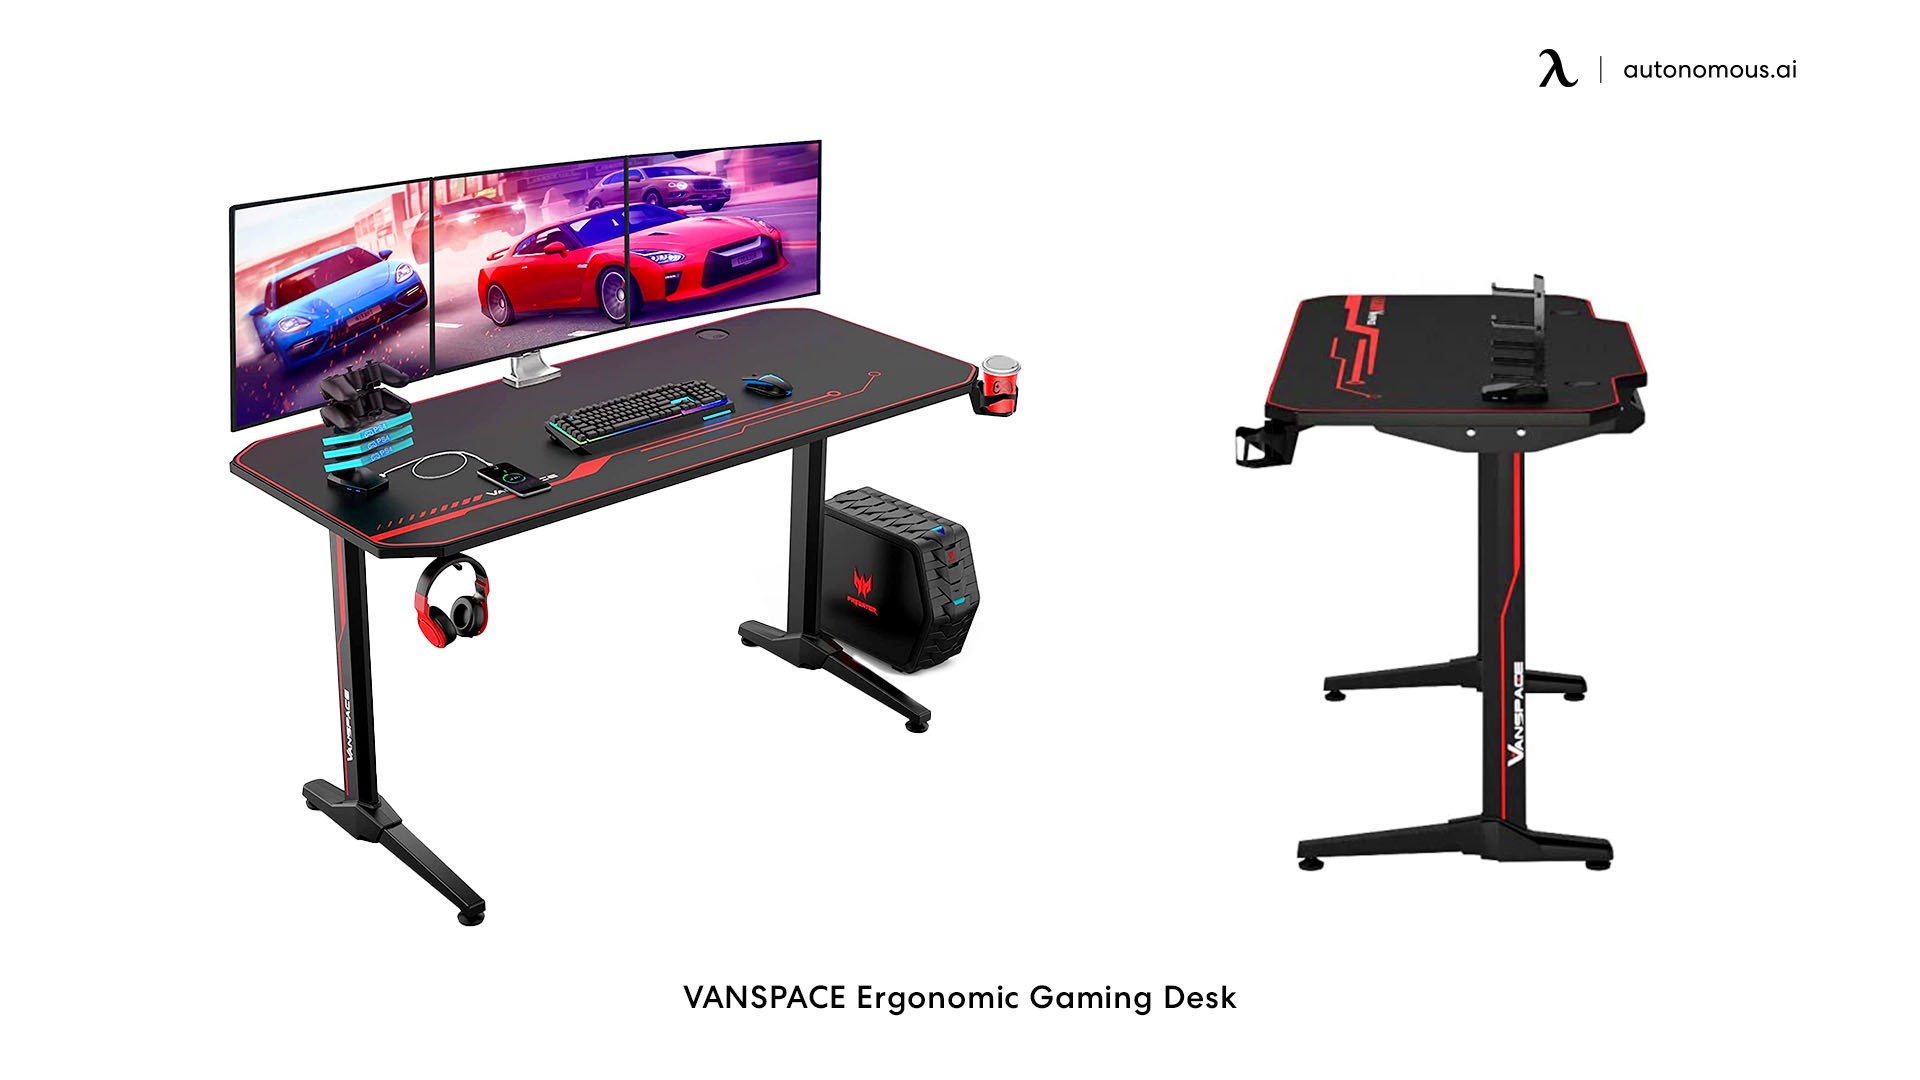 VANSPACE Ergonomic Gaming Desk